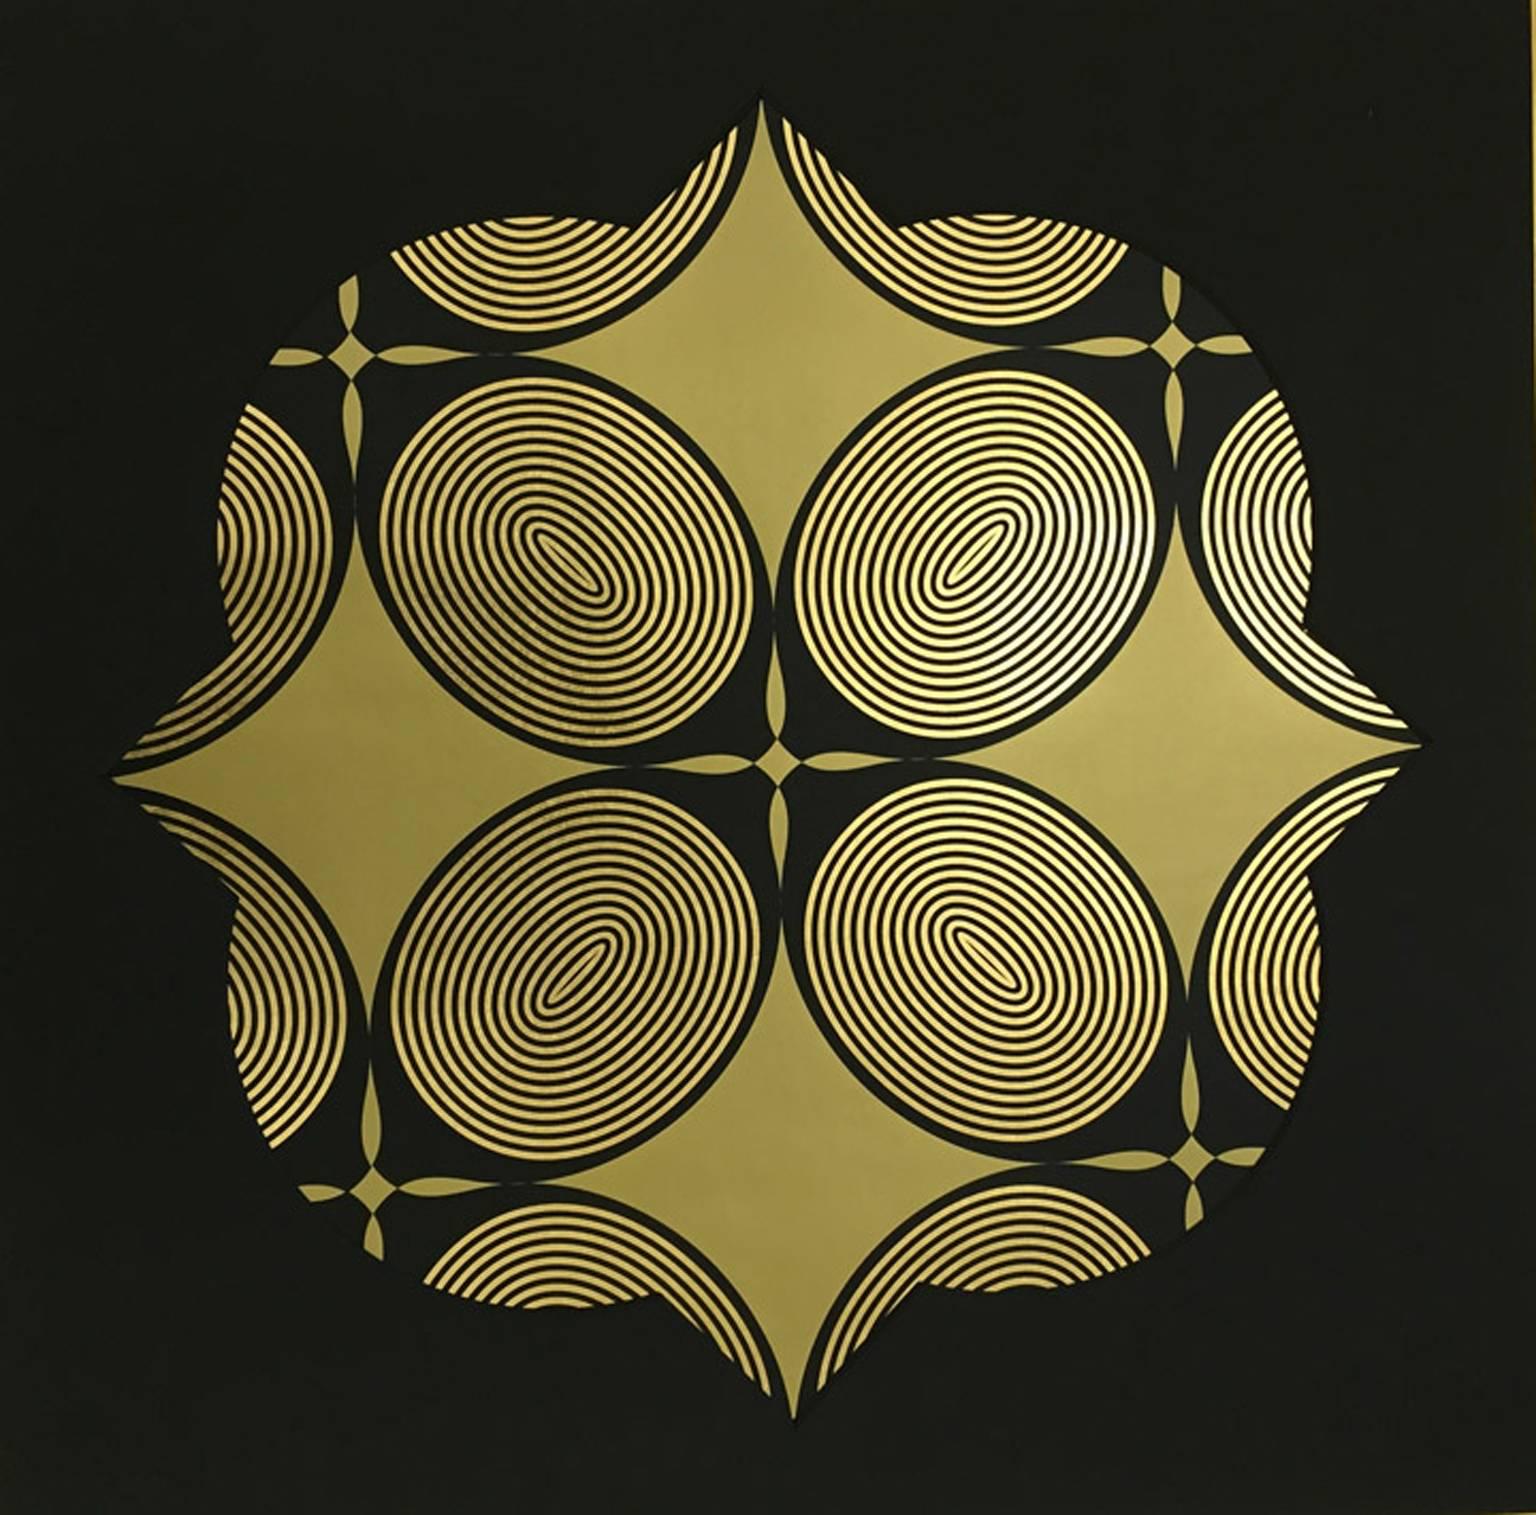 Royal Palm Window I (design gold black metallic work on paper Art Deco patterns) - Mixed Media Art by Lisa Hunt